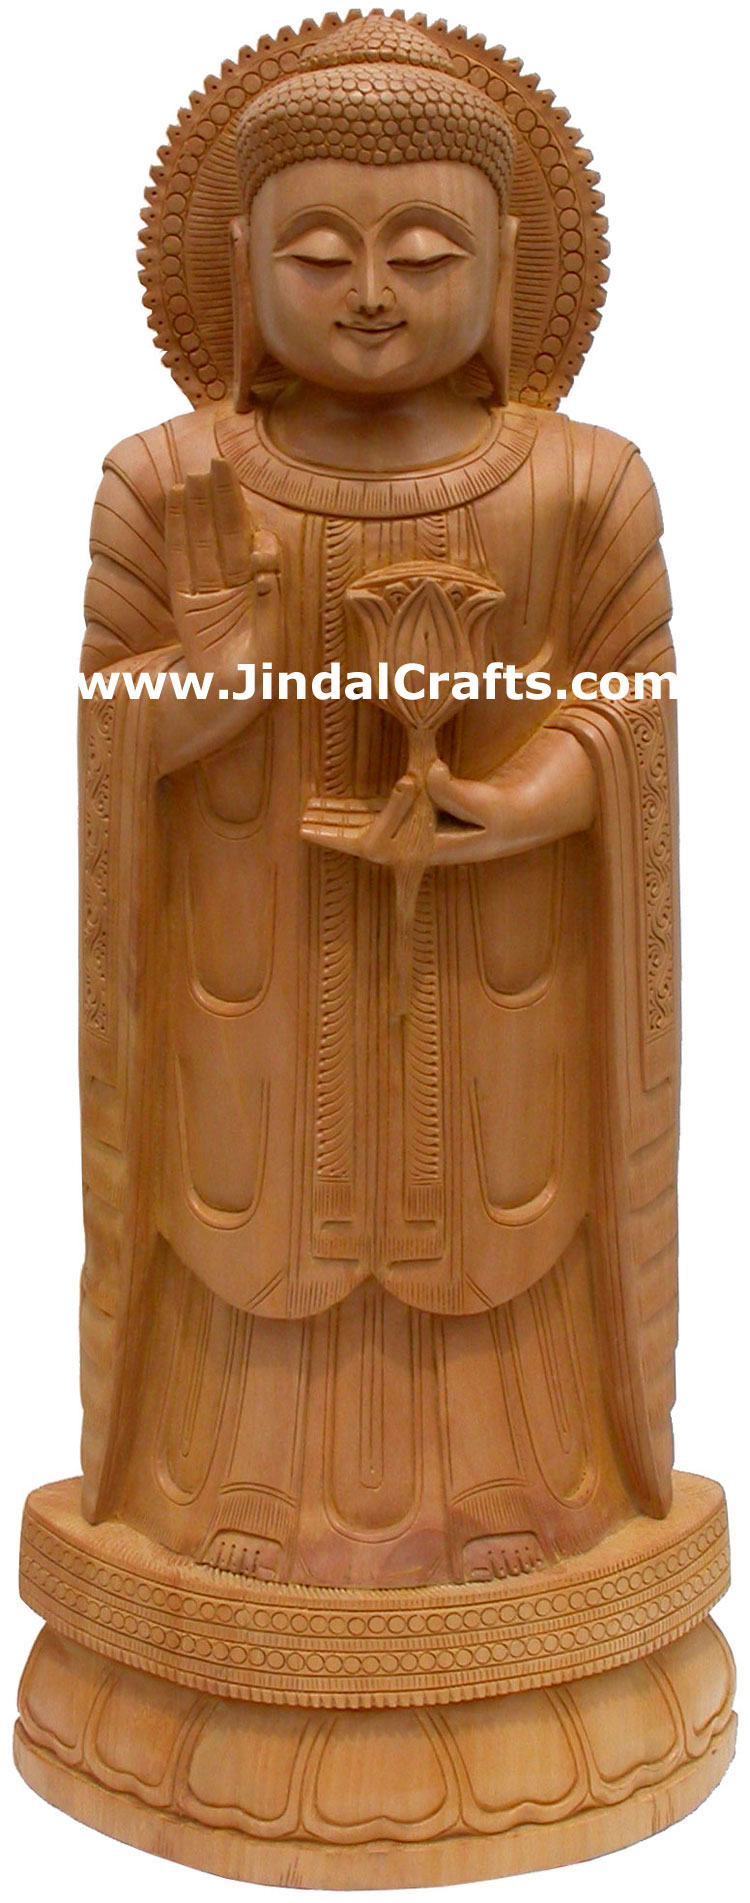 Masterpiece - Hand Carved Wooden Buddha Sculpture Indian Statue Art Tibetan Arts